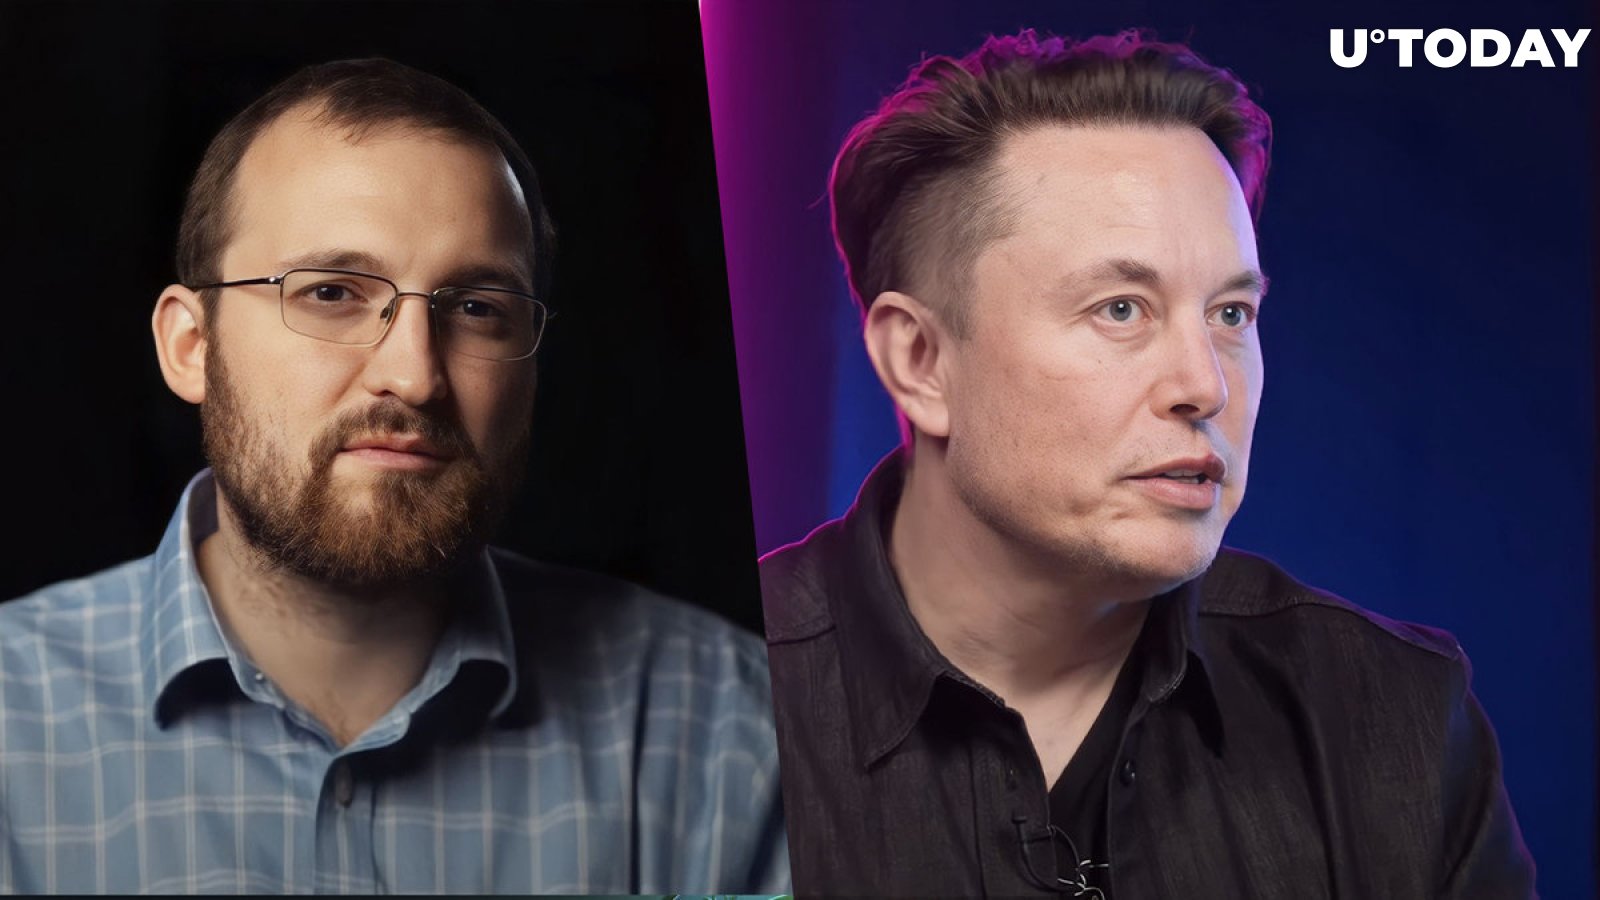 Cardano's Charles Hoskinson Reacts to Elon Musk's Latest Achievement